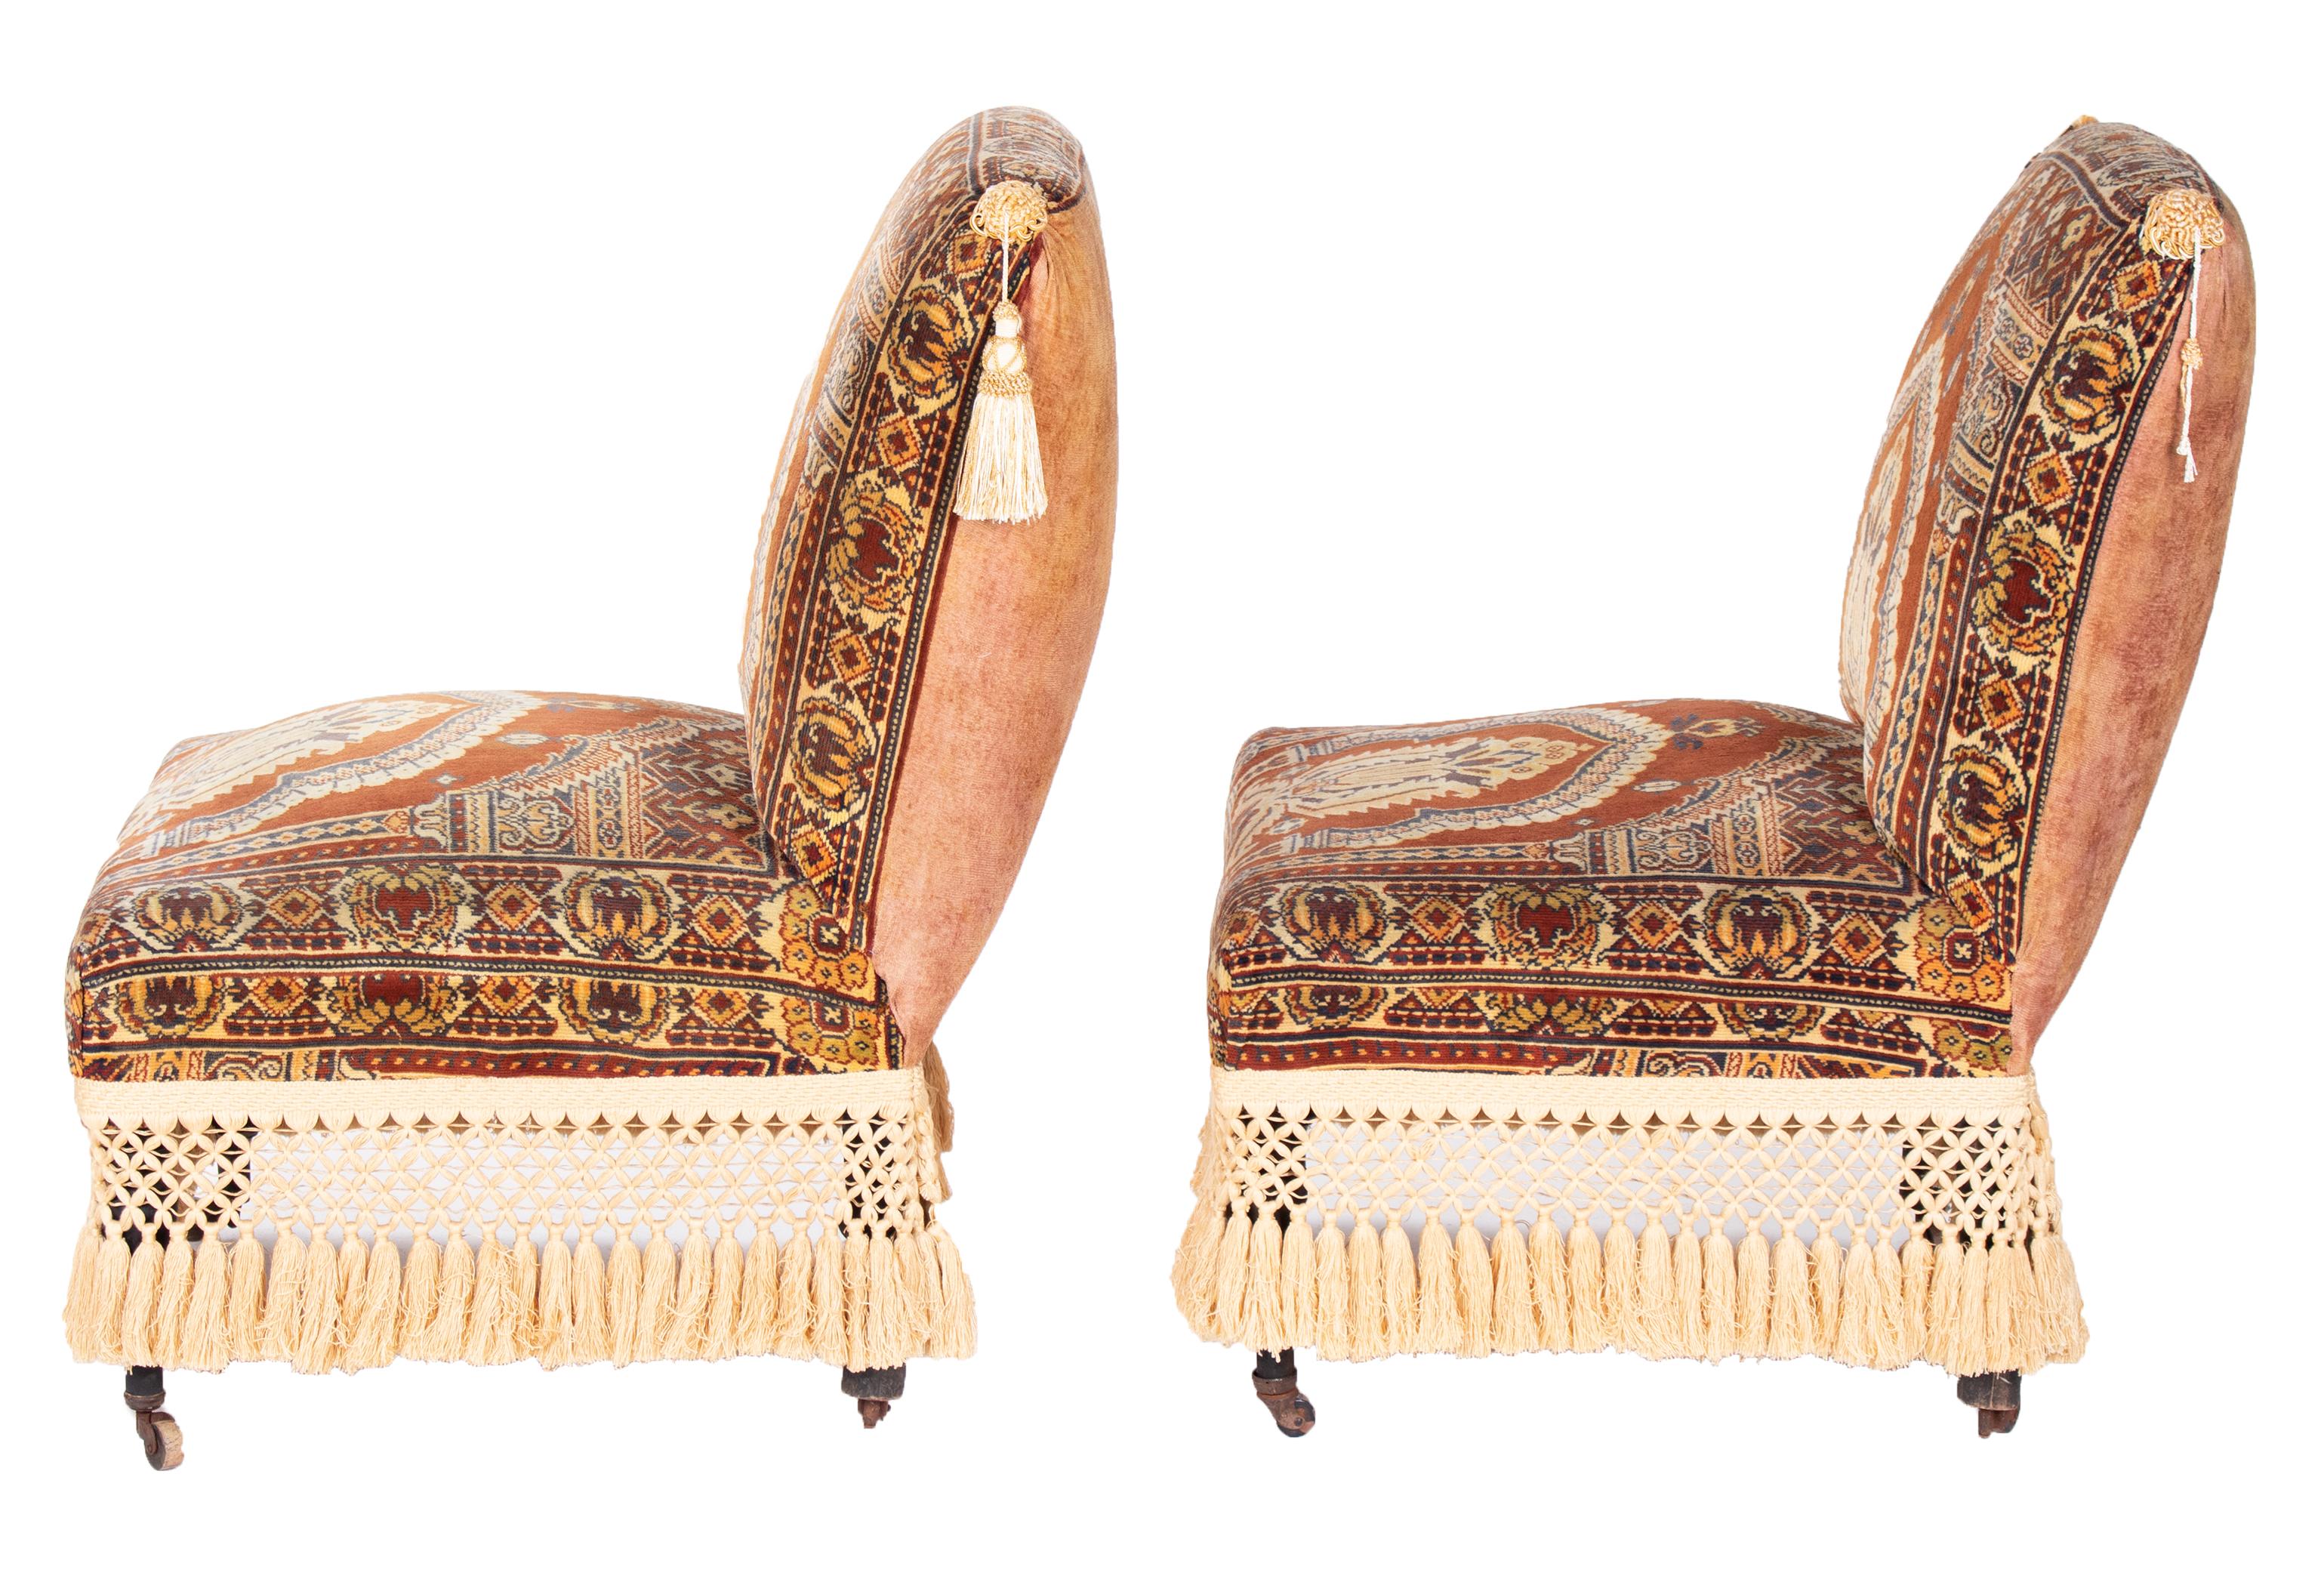 19th century pair of Turkish upholstered seats.